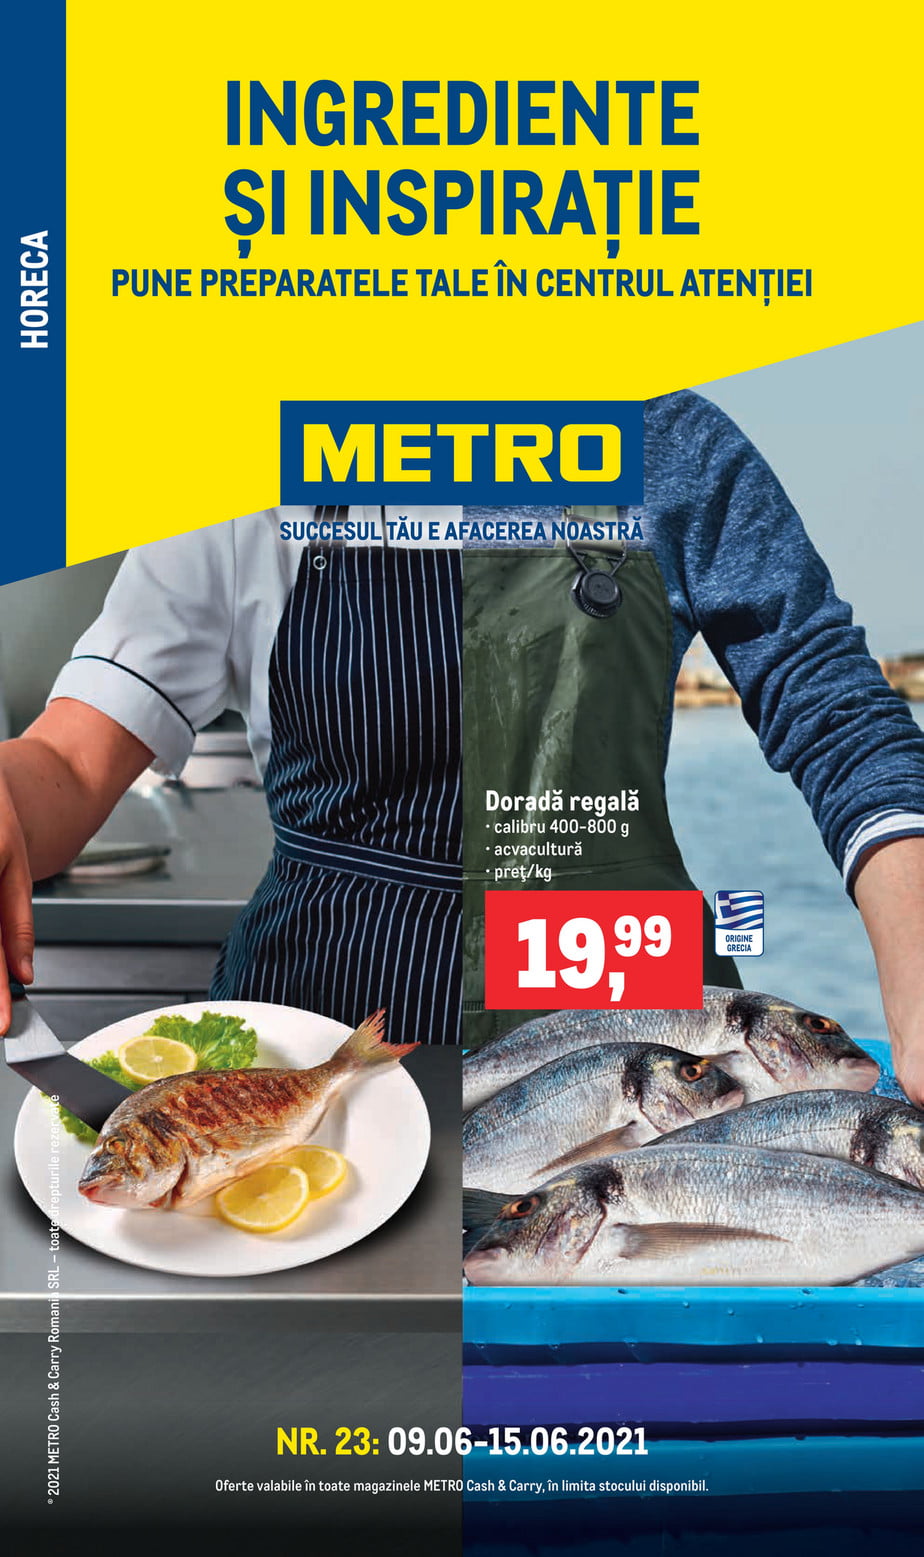 Catalog Metro 9 iunie - 15 iunie 2021 Ingrediente si inspiratie - Produse proaspete pentru HoReCa